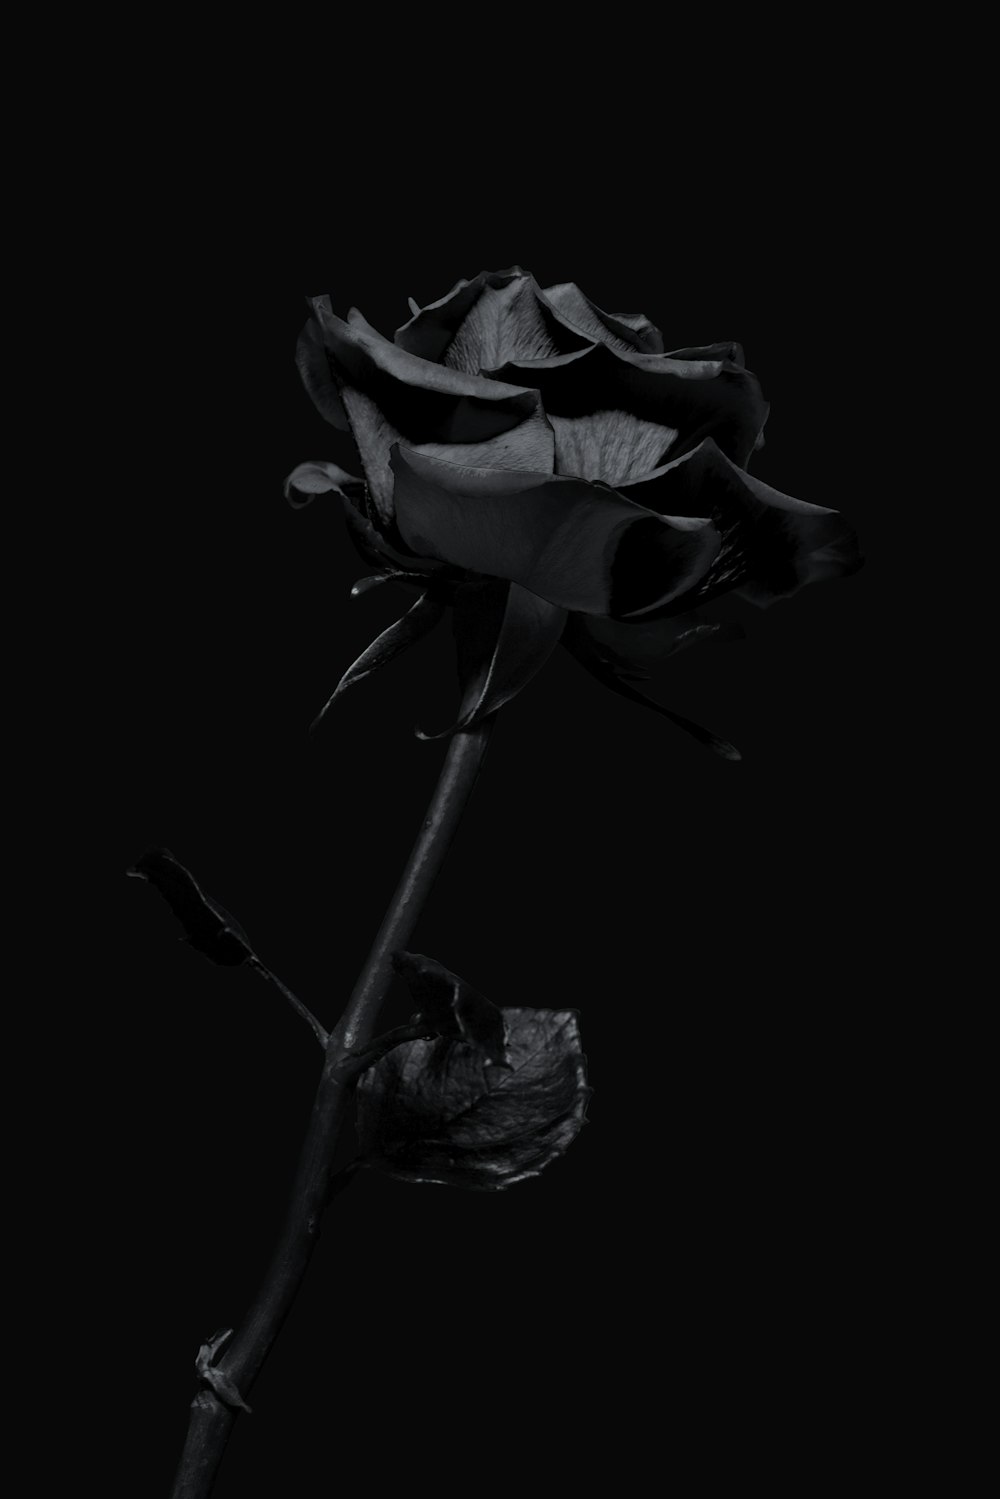 550+ Dark Rose Pictures | Download Free Images on Unsplash